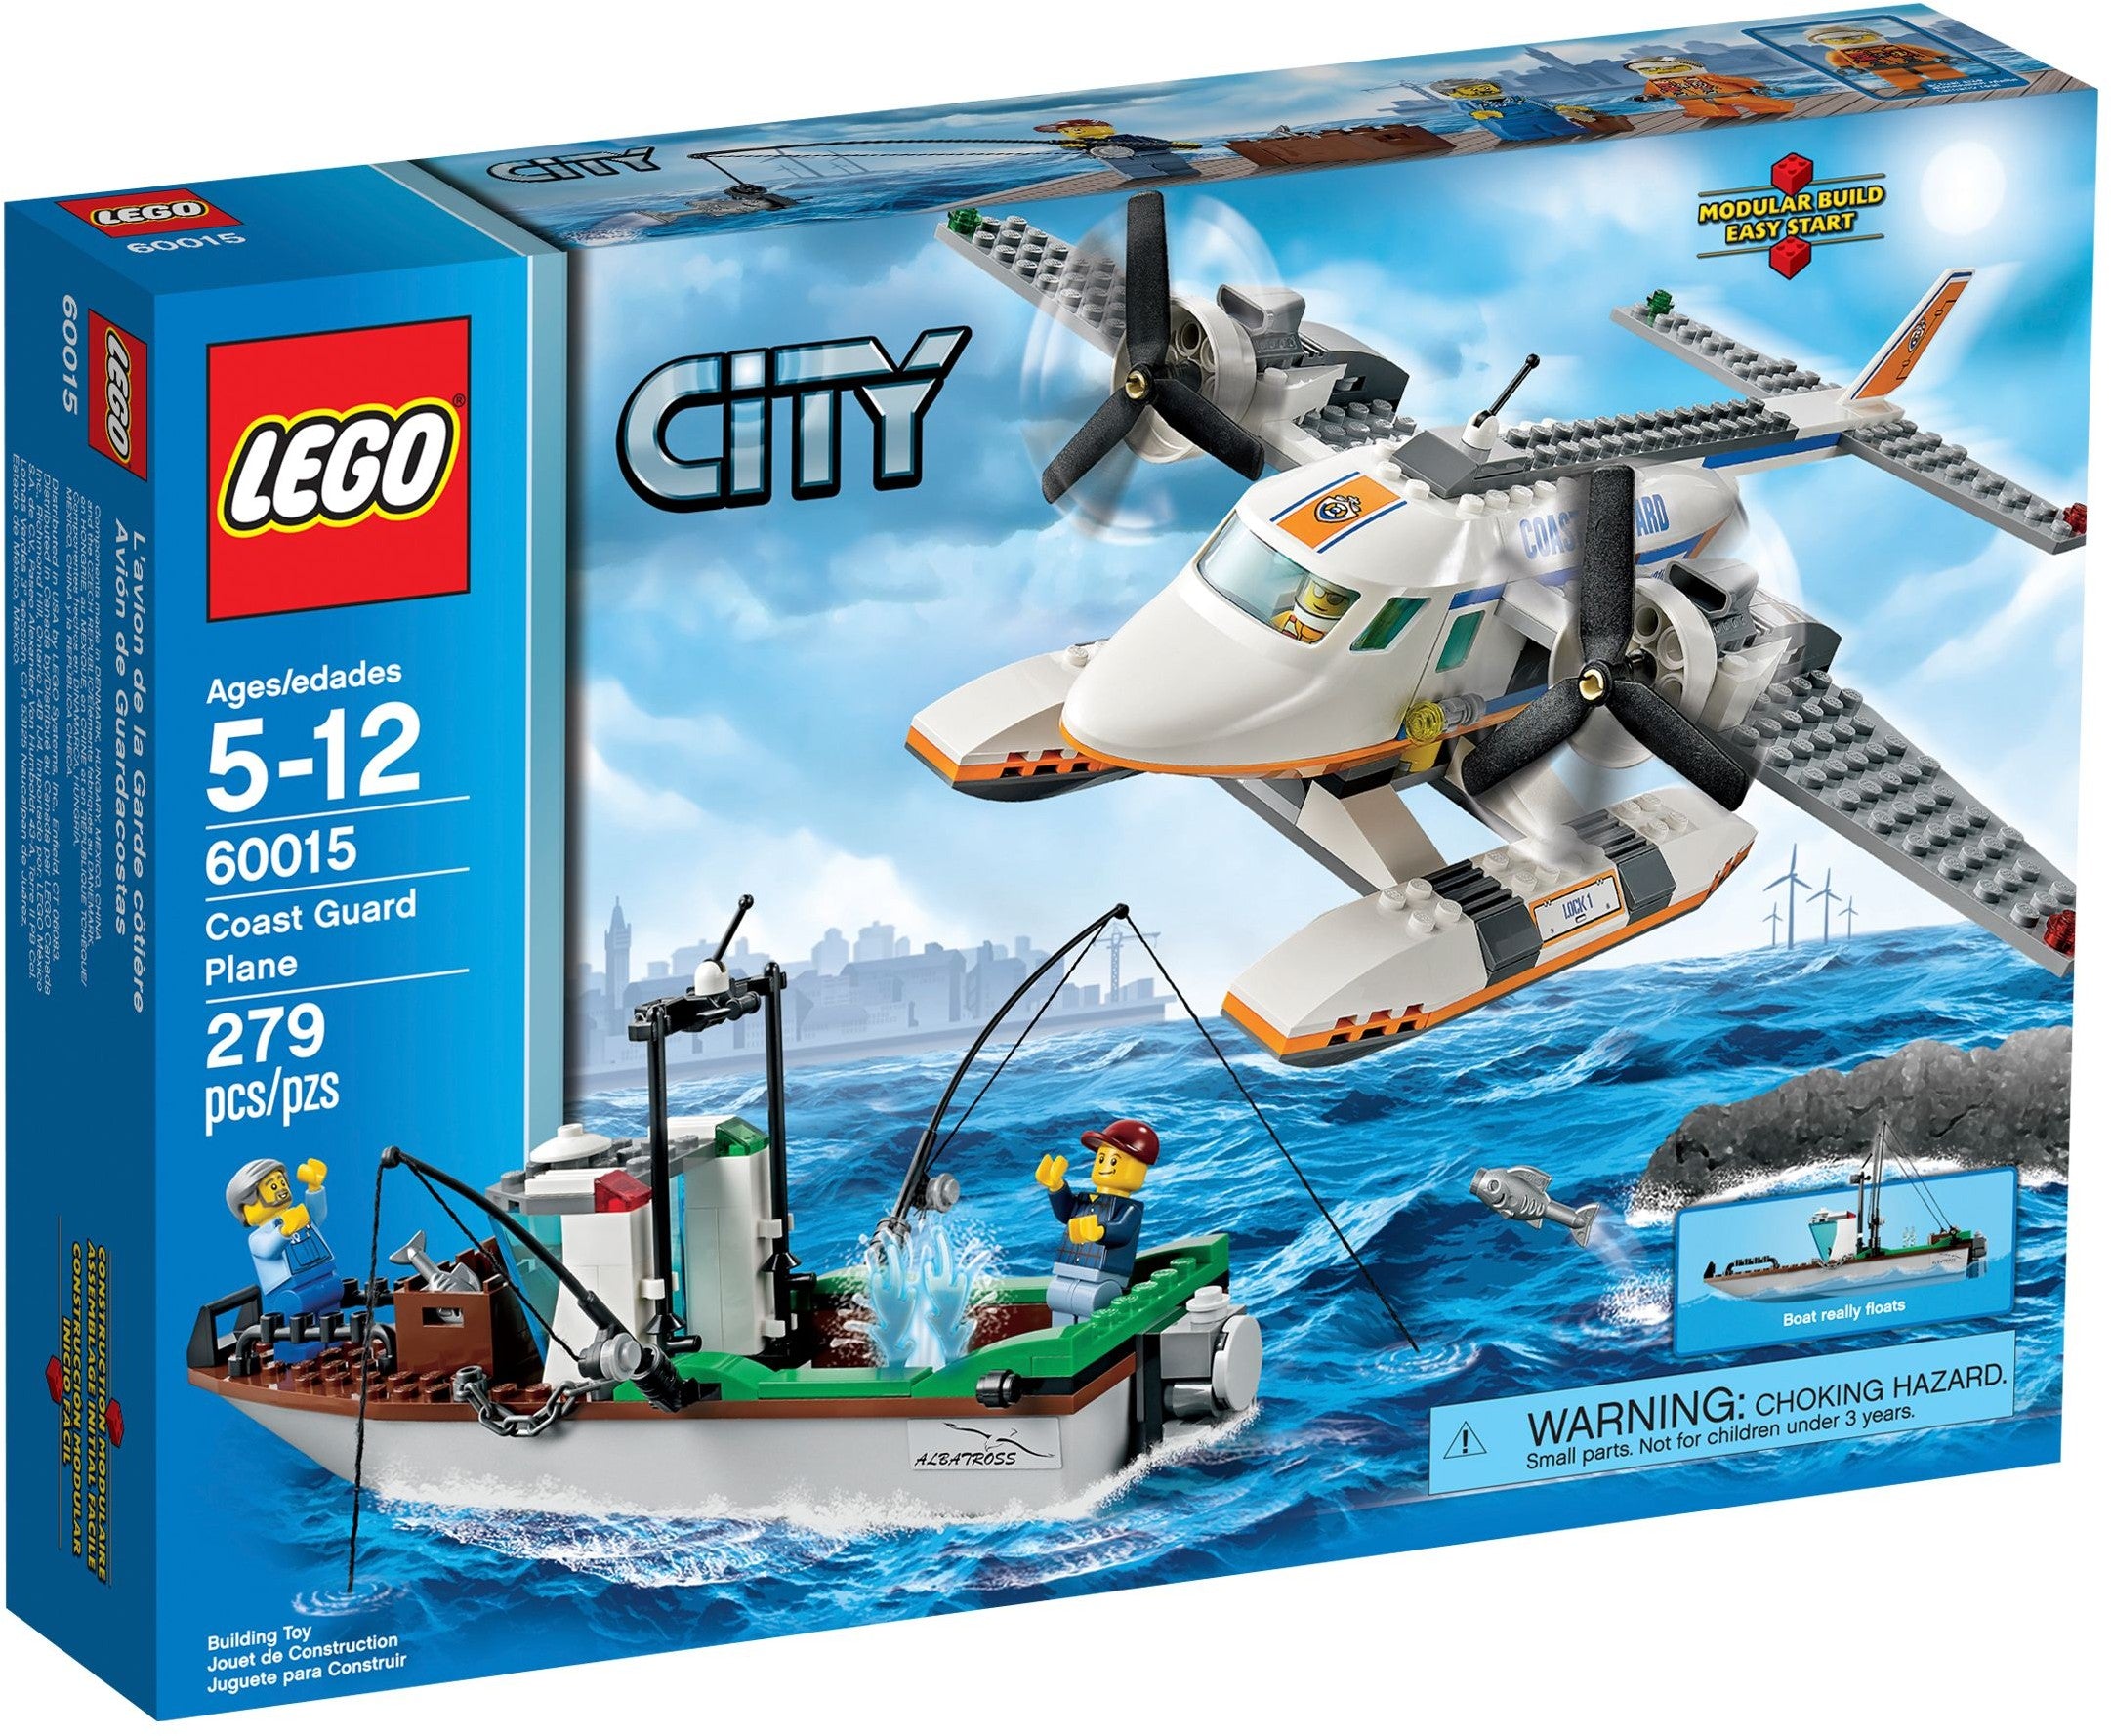 Lego City 60015 - Coast Guard Plane